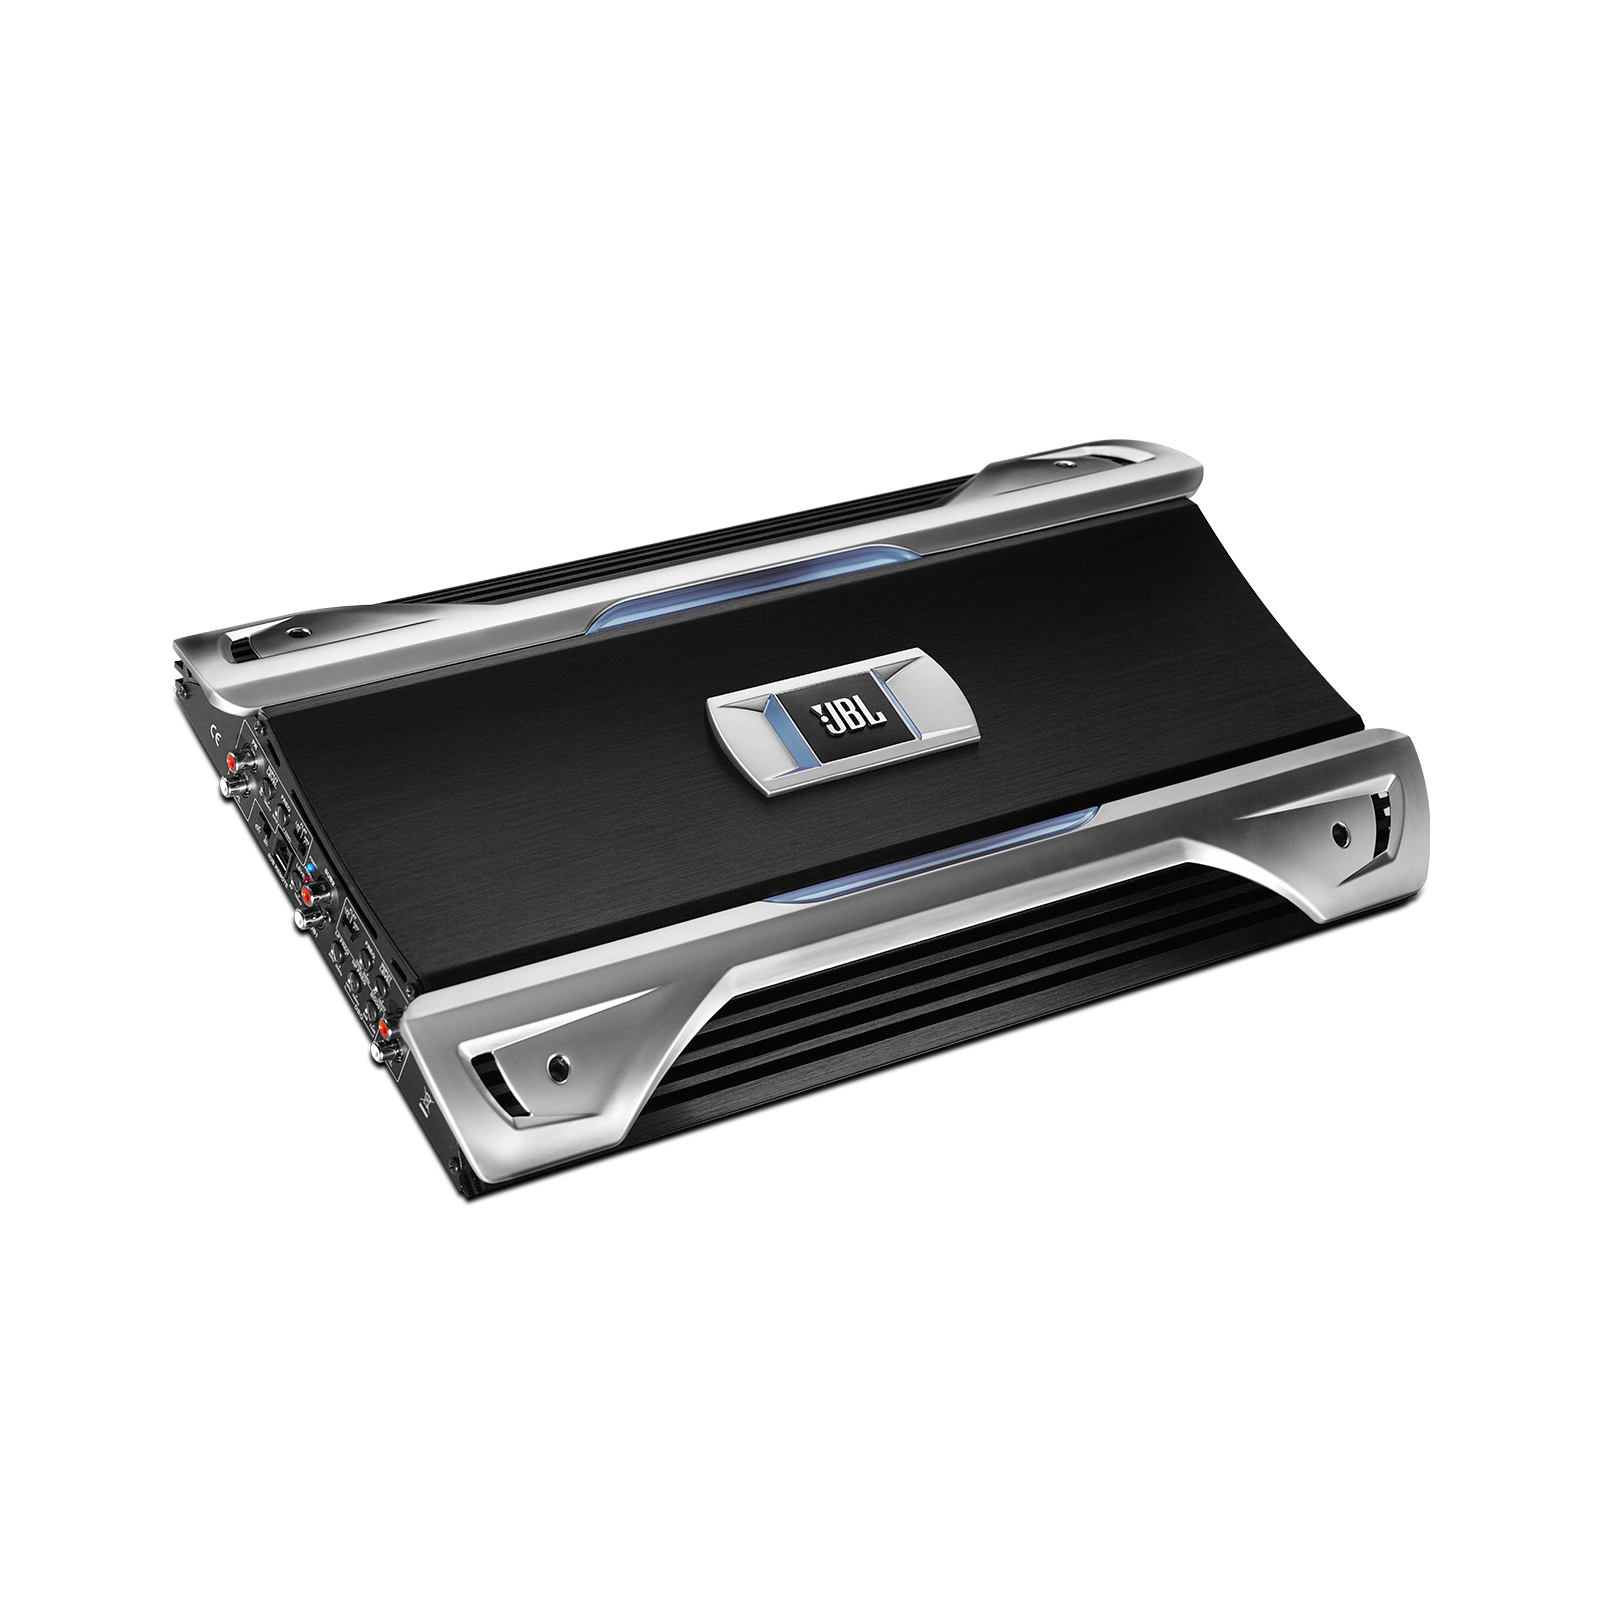 | Full-range amplifier your car audio system.